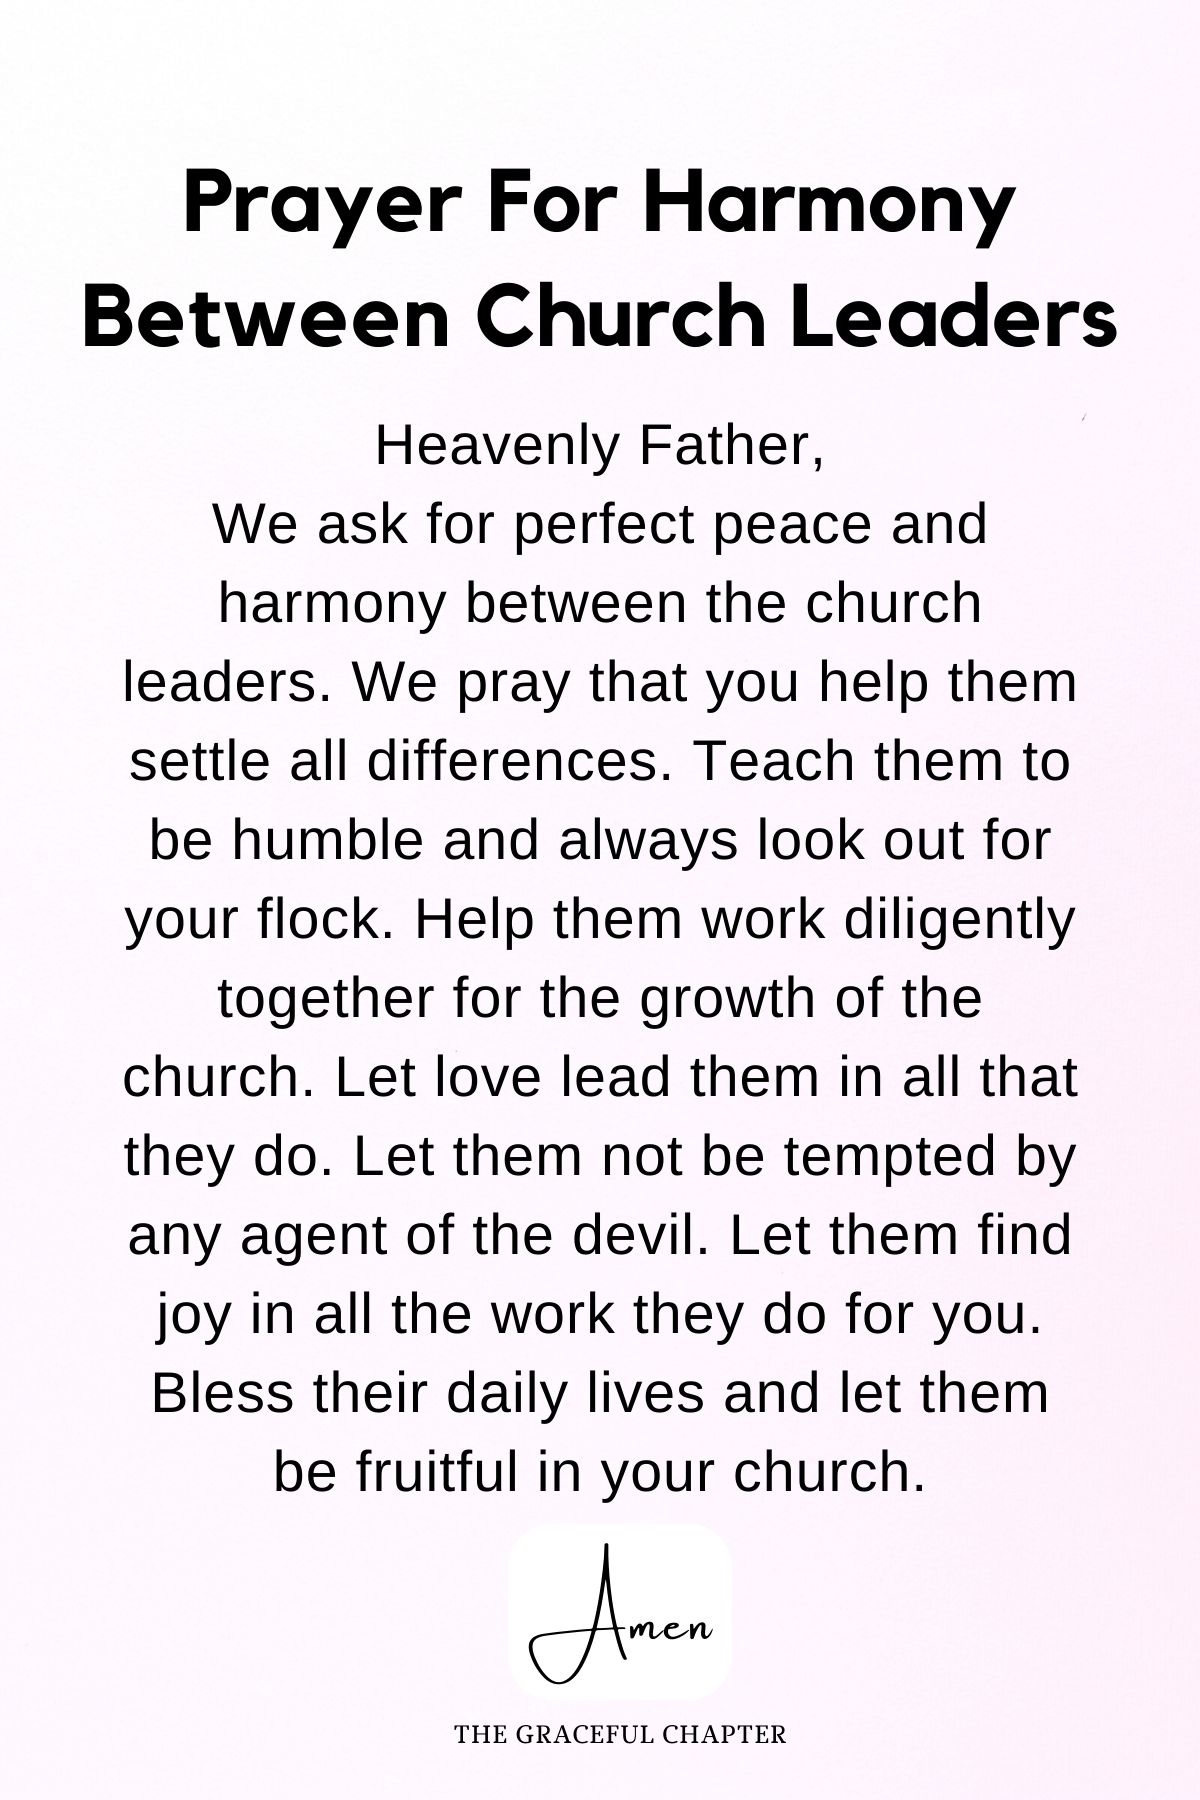 Prayer for harmony between church leaders